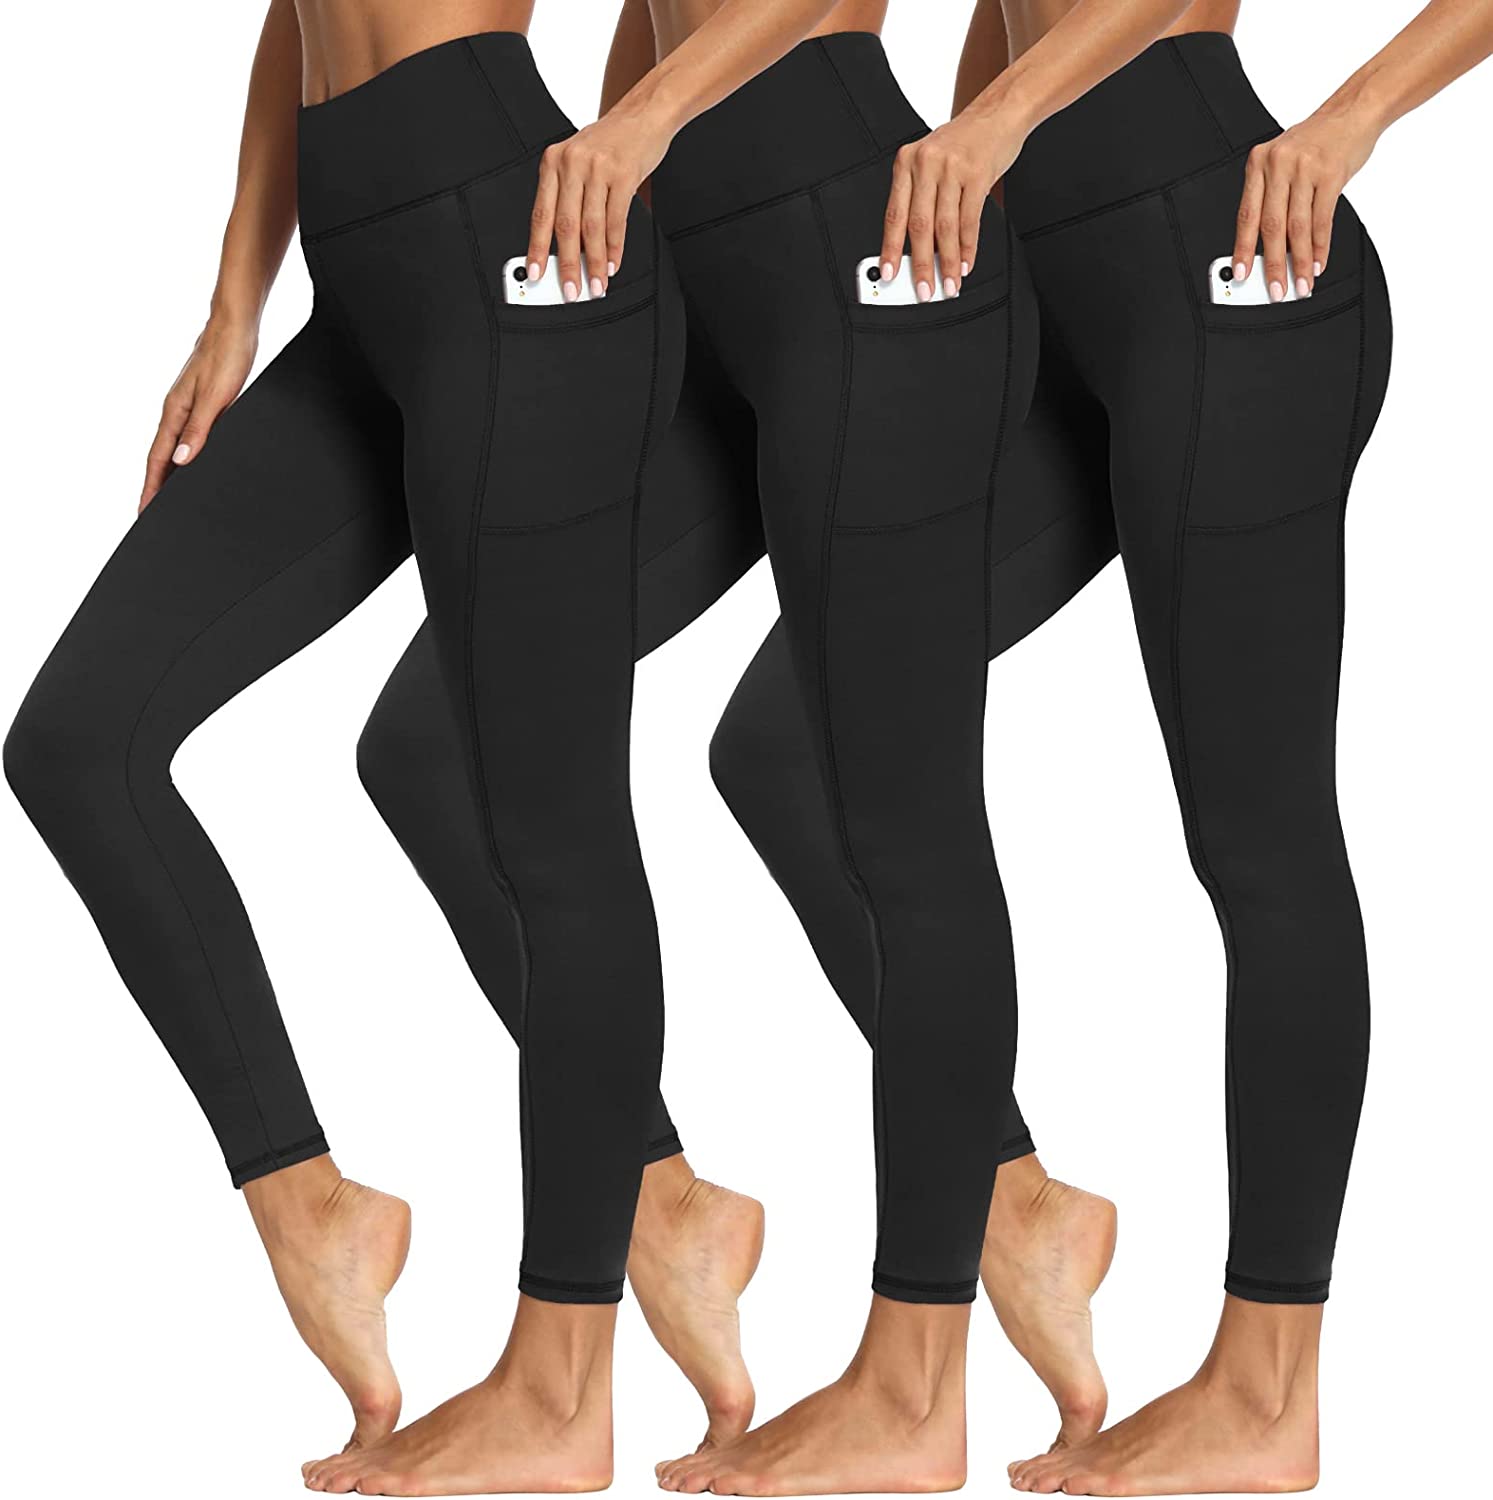 yeuG Women's Plus Size Leggings with Pocket-2 Pack High Waist Tummy Control  Yoga Pants Spandex Workout Running Black Leggings